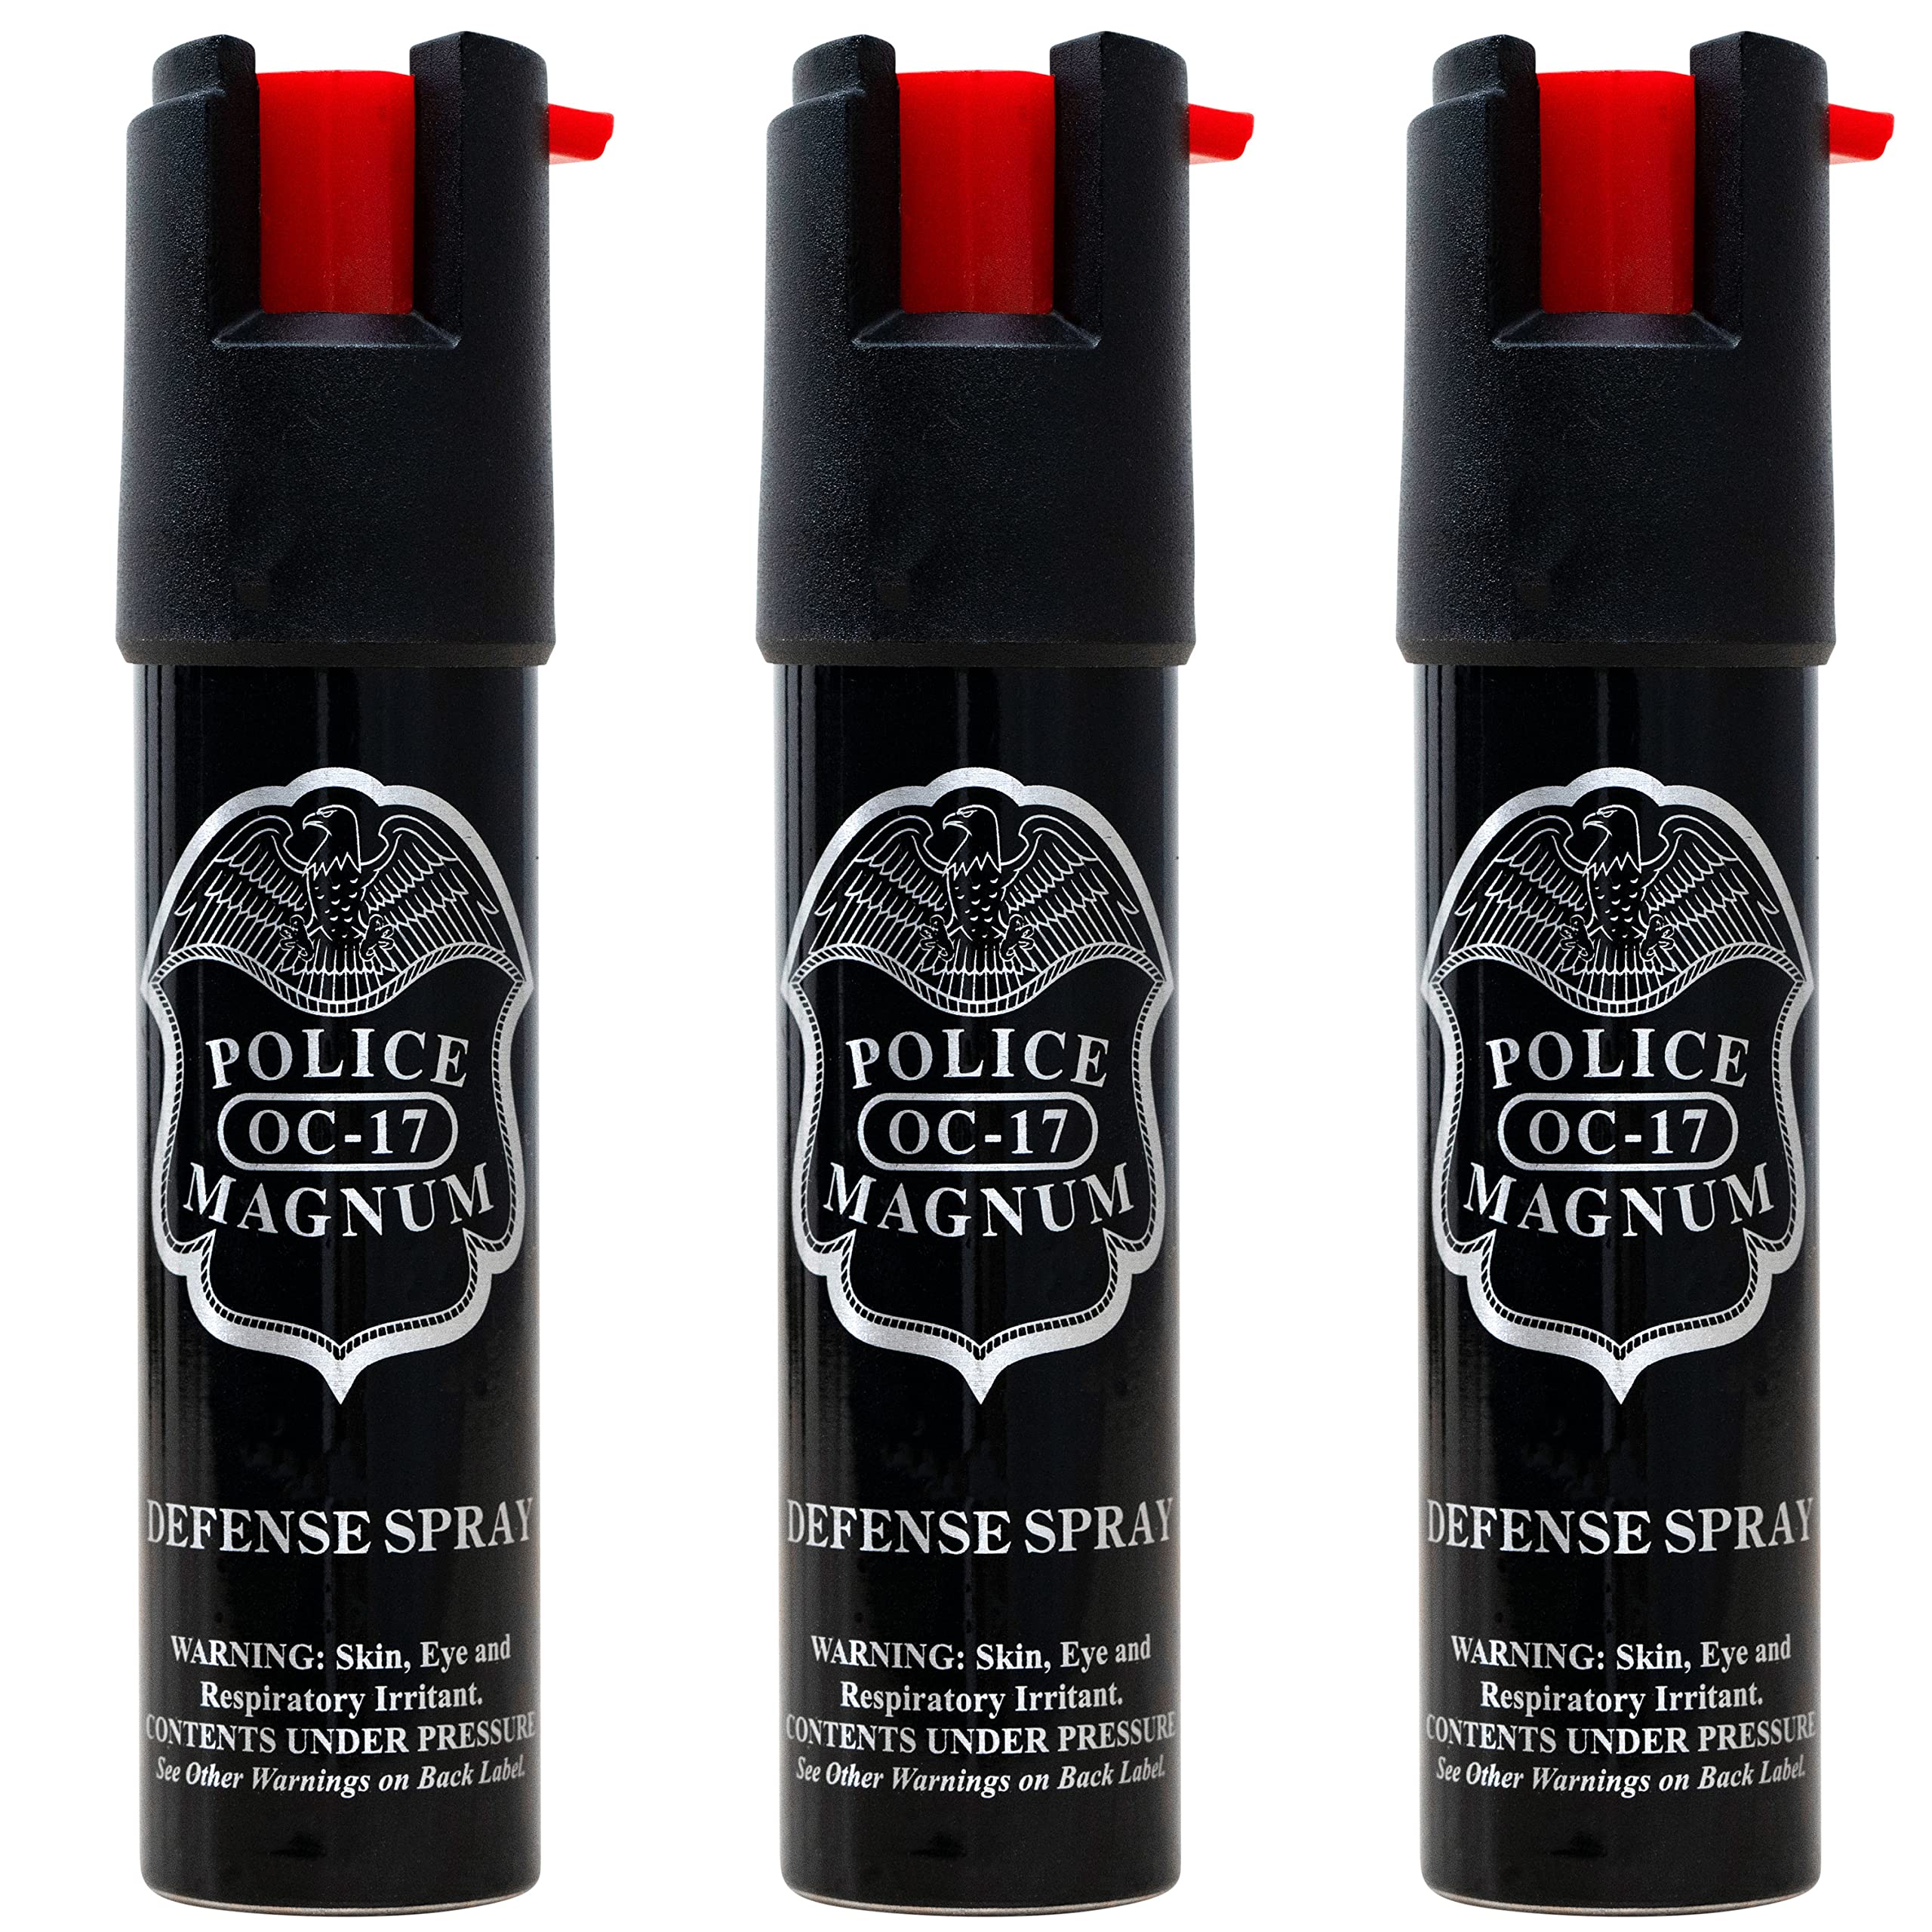 Police Magnum Large pepper spray fogger defense security